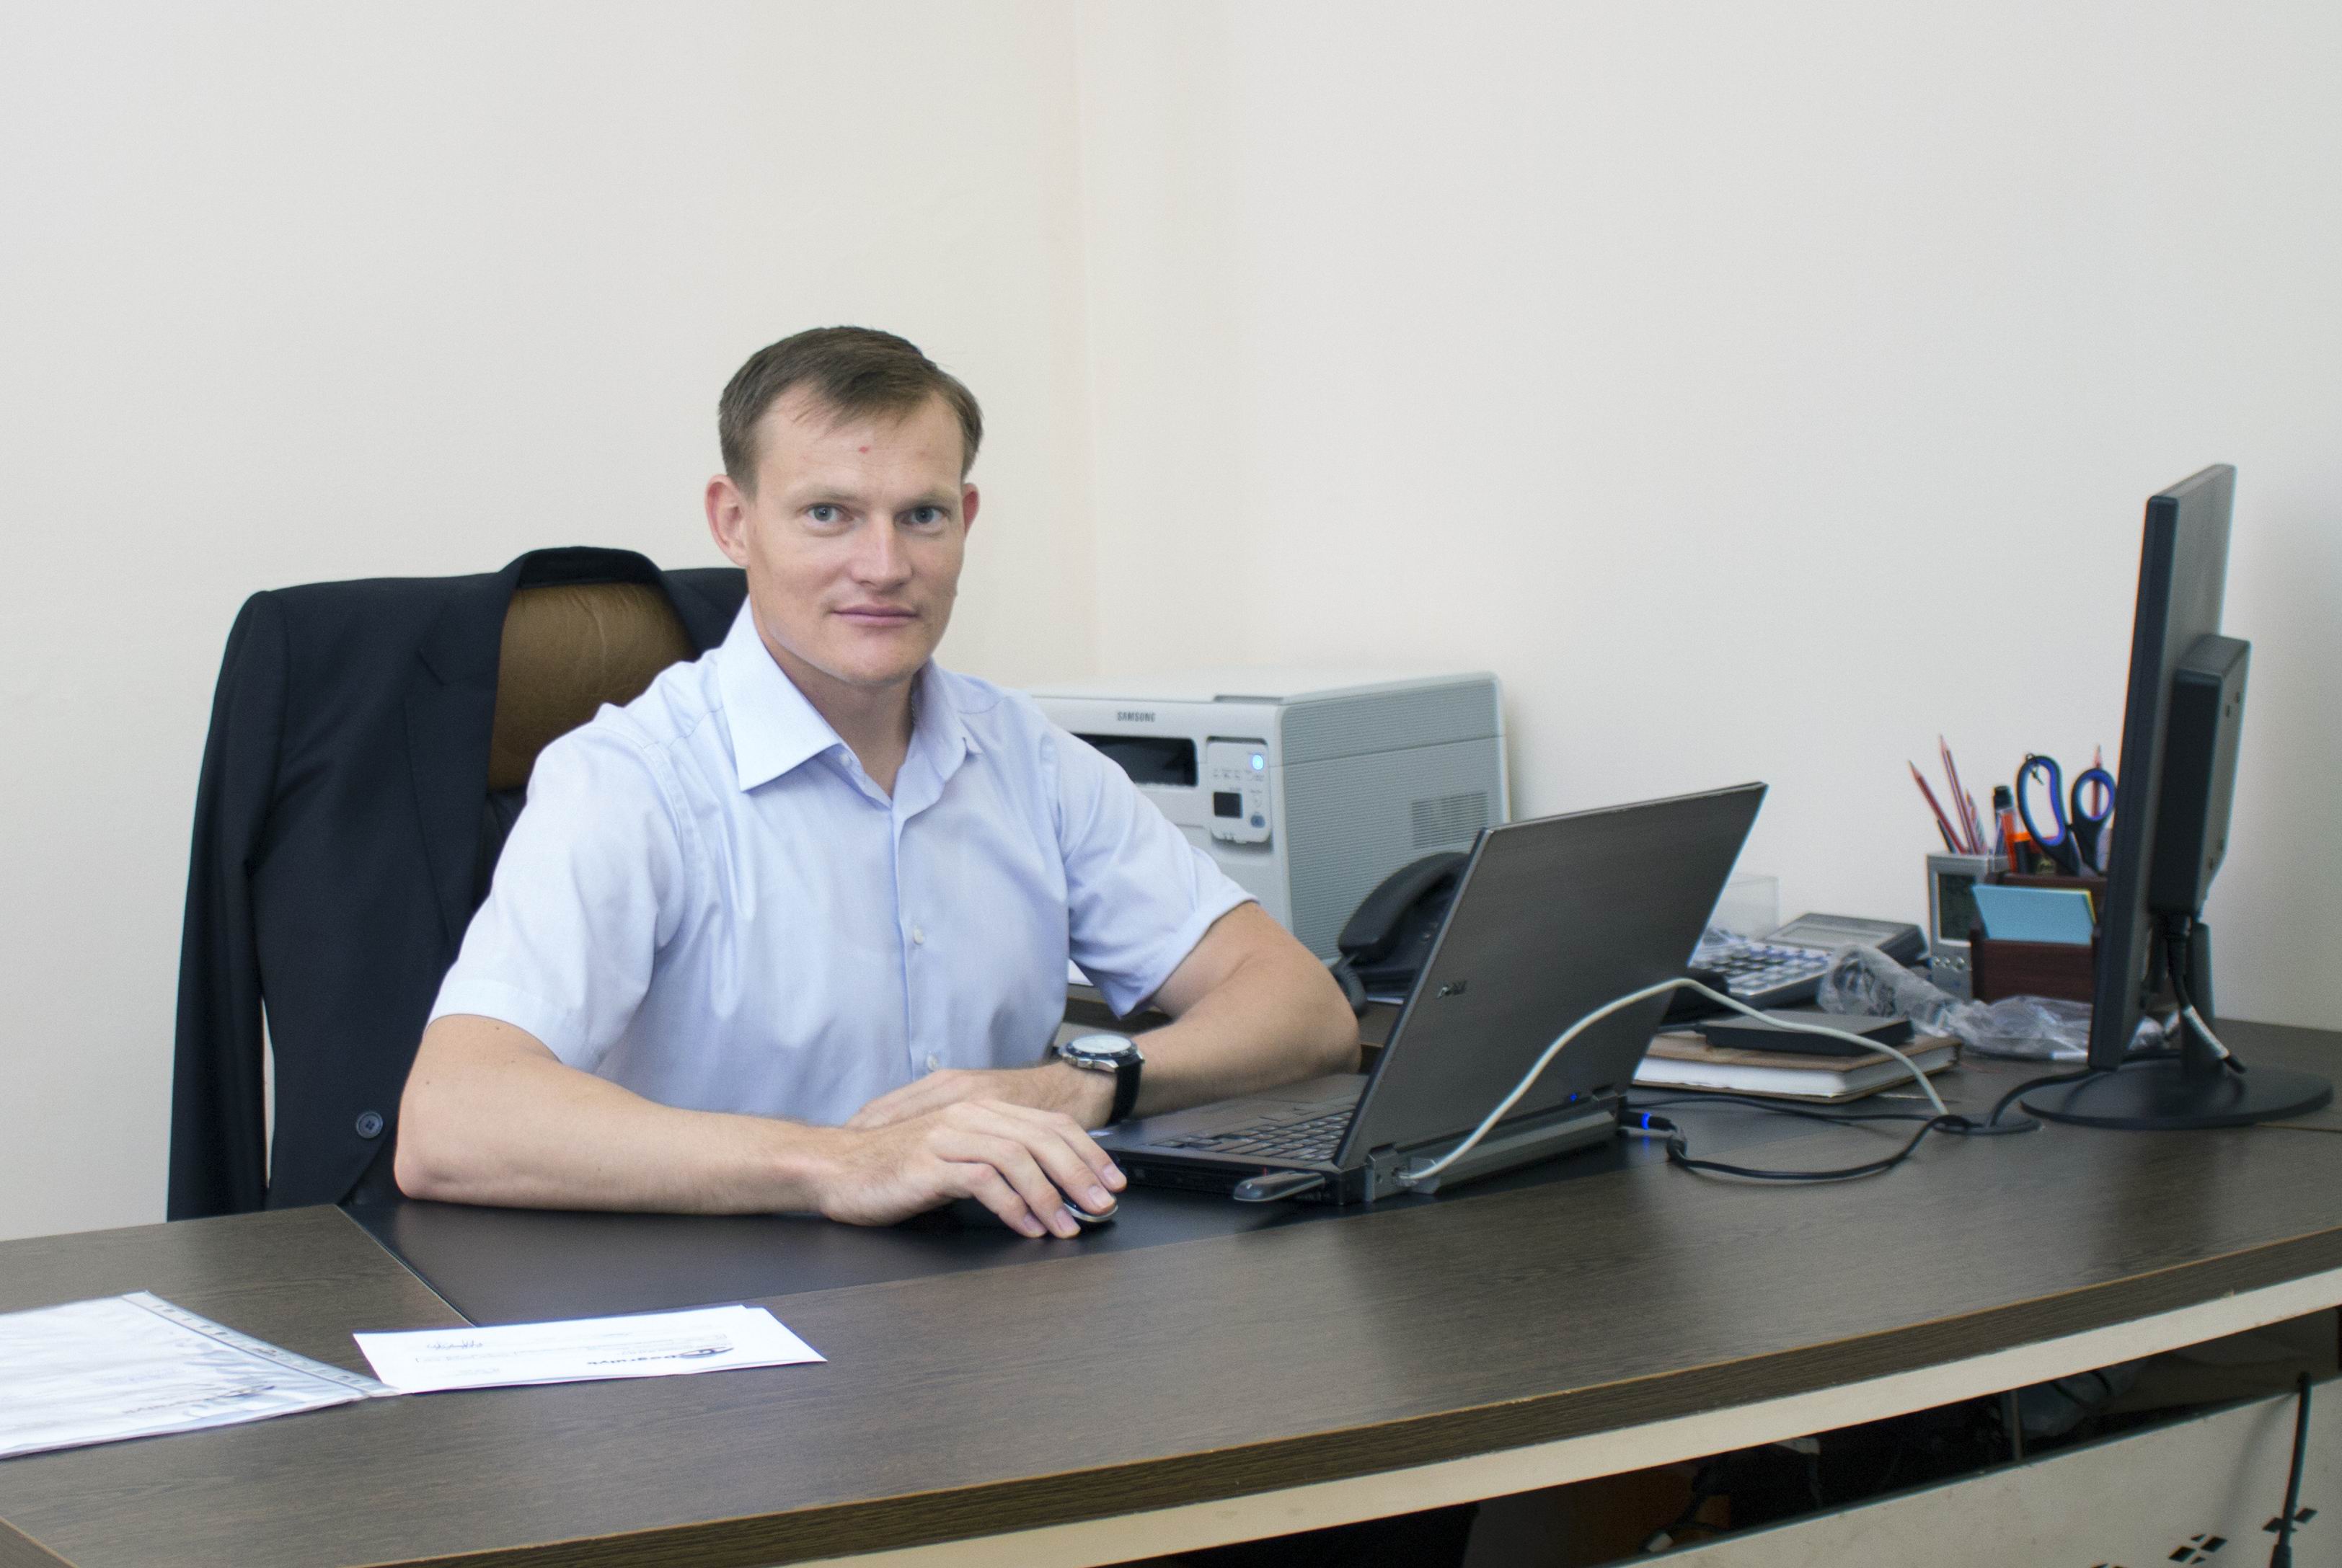 Head of the Service Center Zverkov Igor